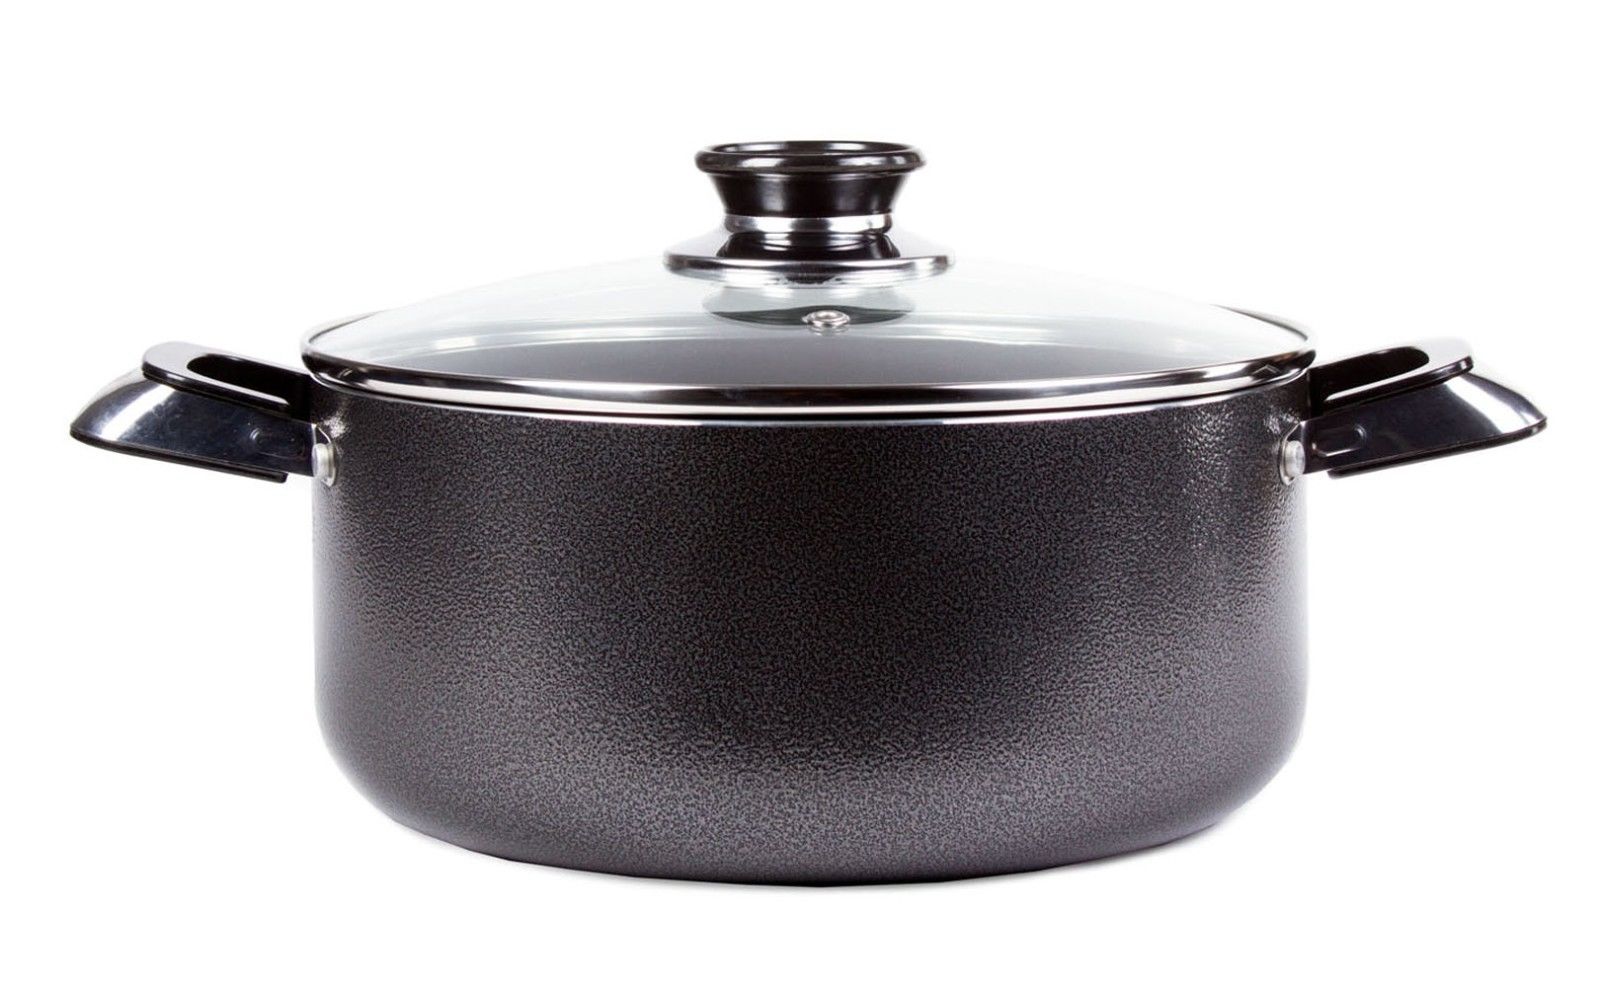 Imperial Home Nonstick Cookware Sets - 10 Pc Black Pots and Pans Set PTFE and PFOA Safe Pots Pans Set